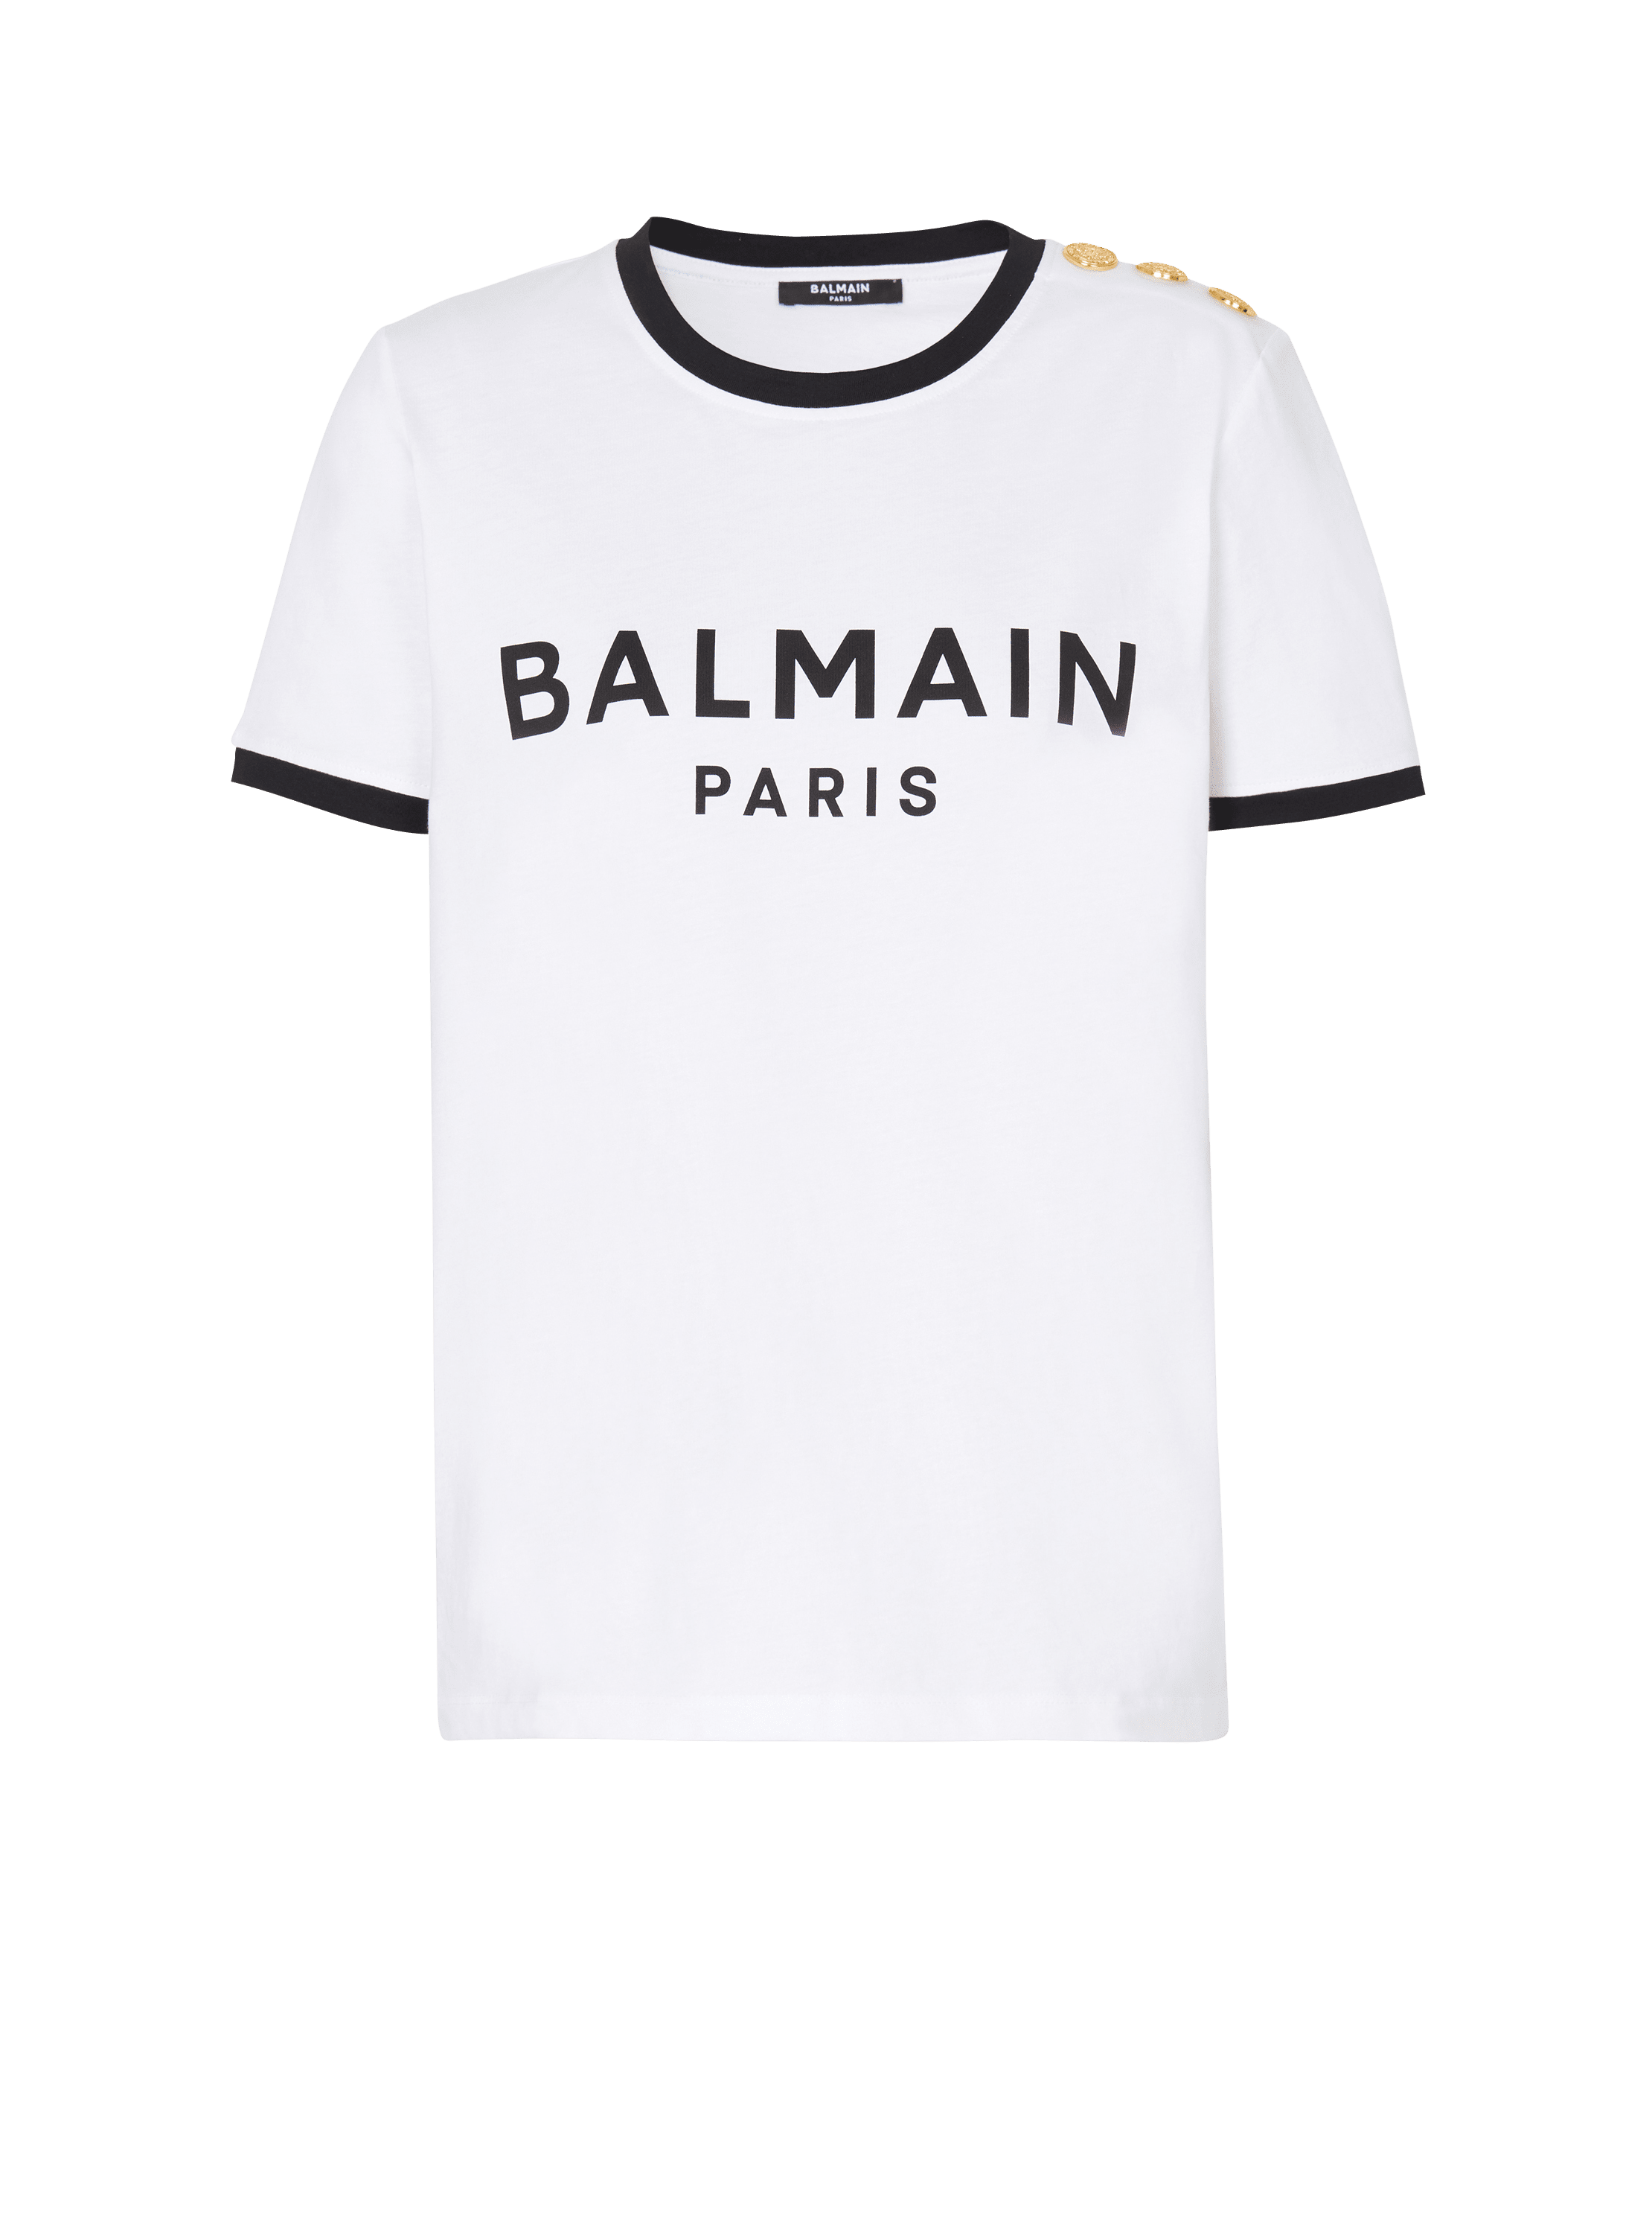 Balmain Paris 3-button T-shirt black - Women | BALMAIN